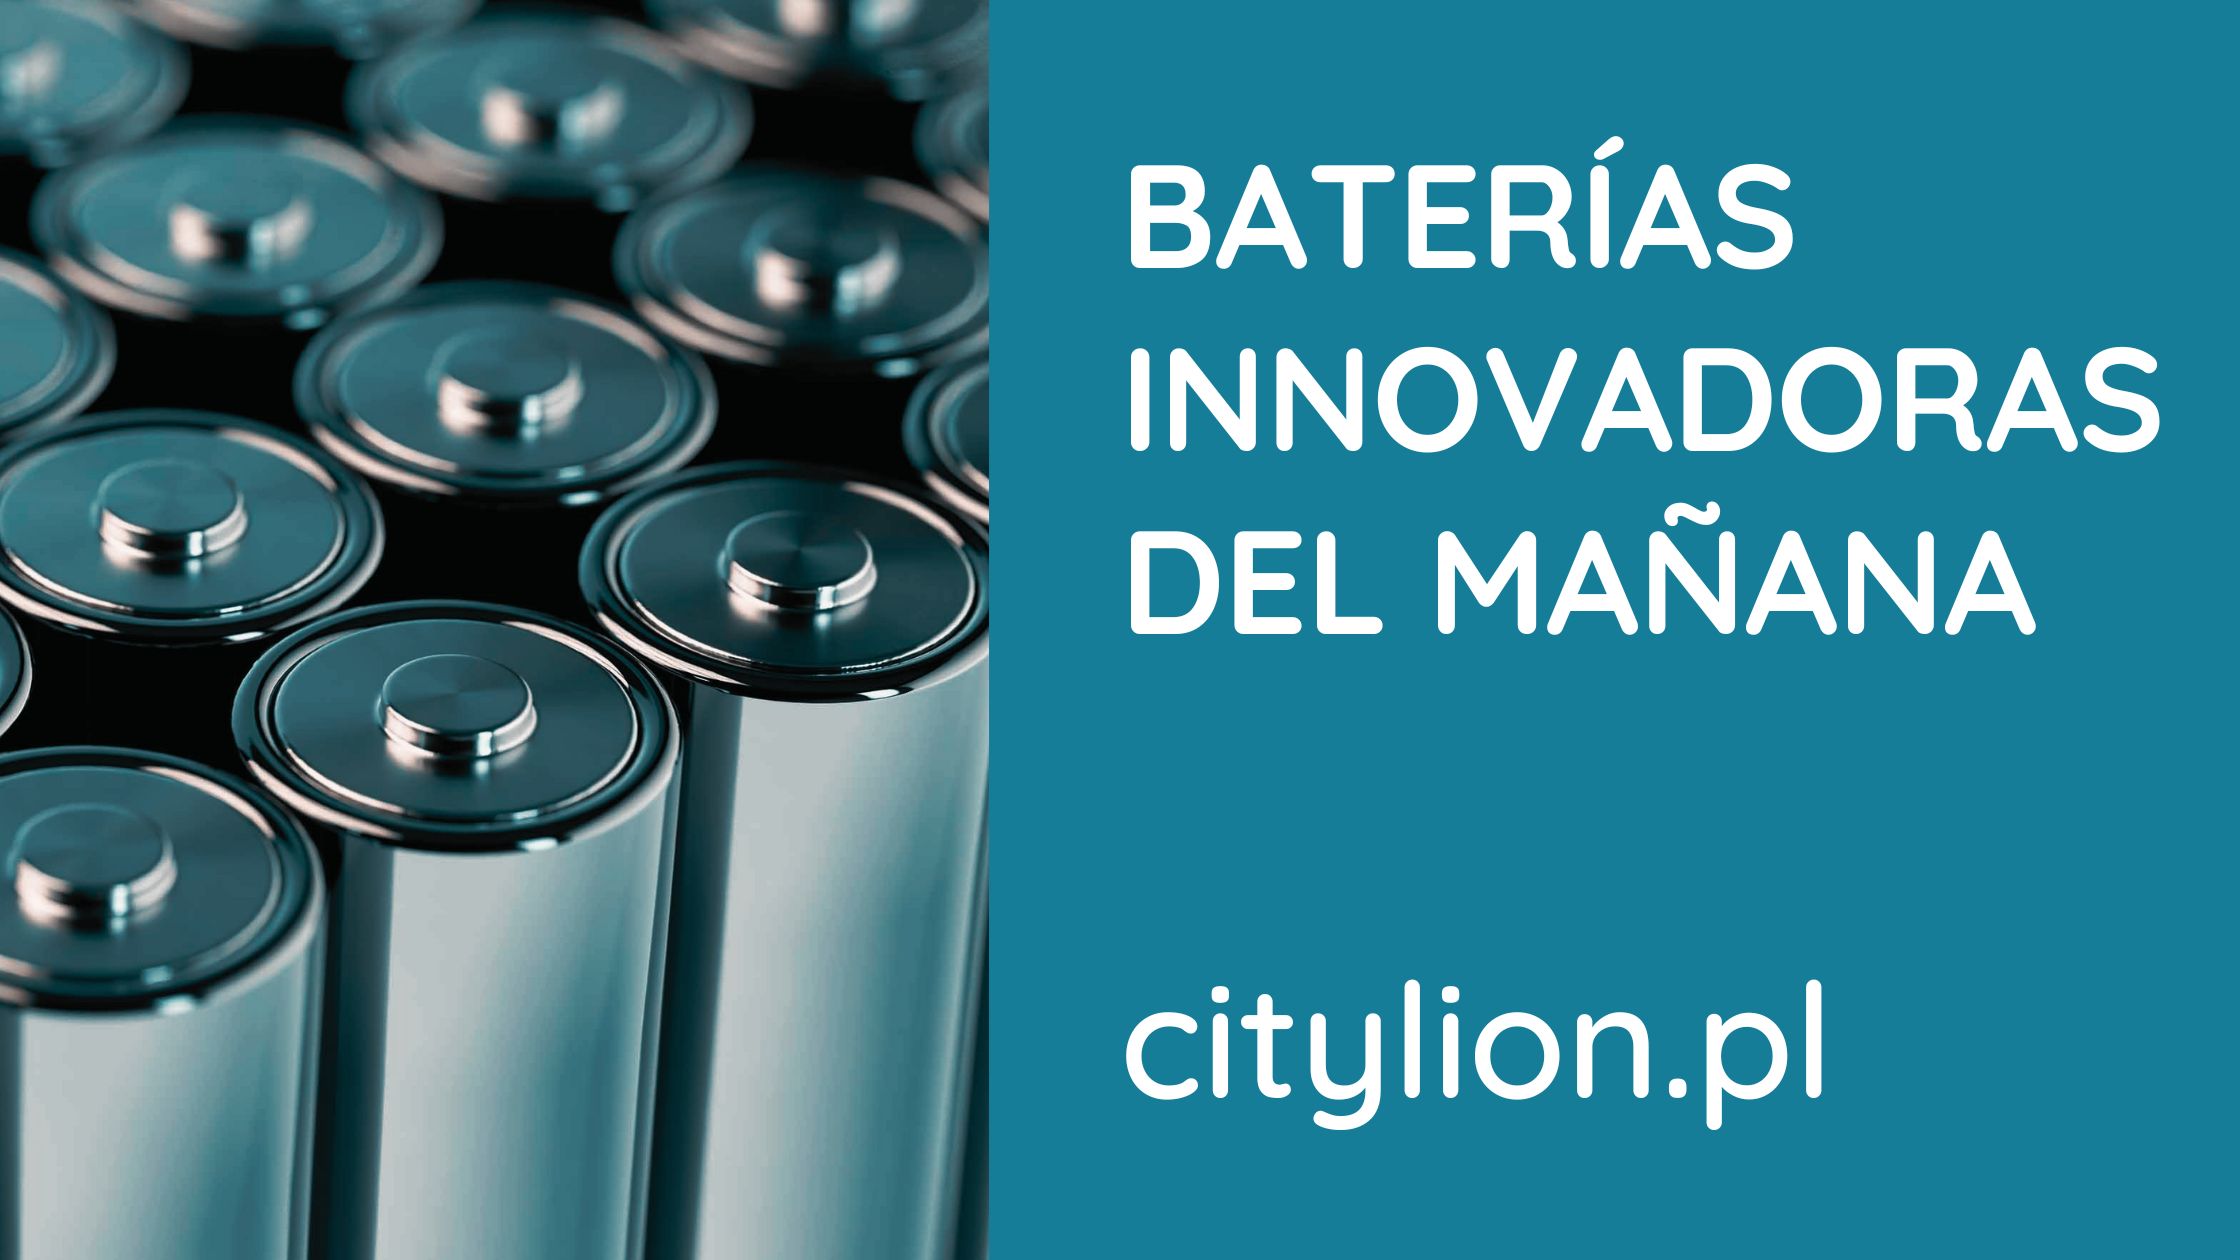 Baterias-Innovadoras-Del-Manana